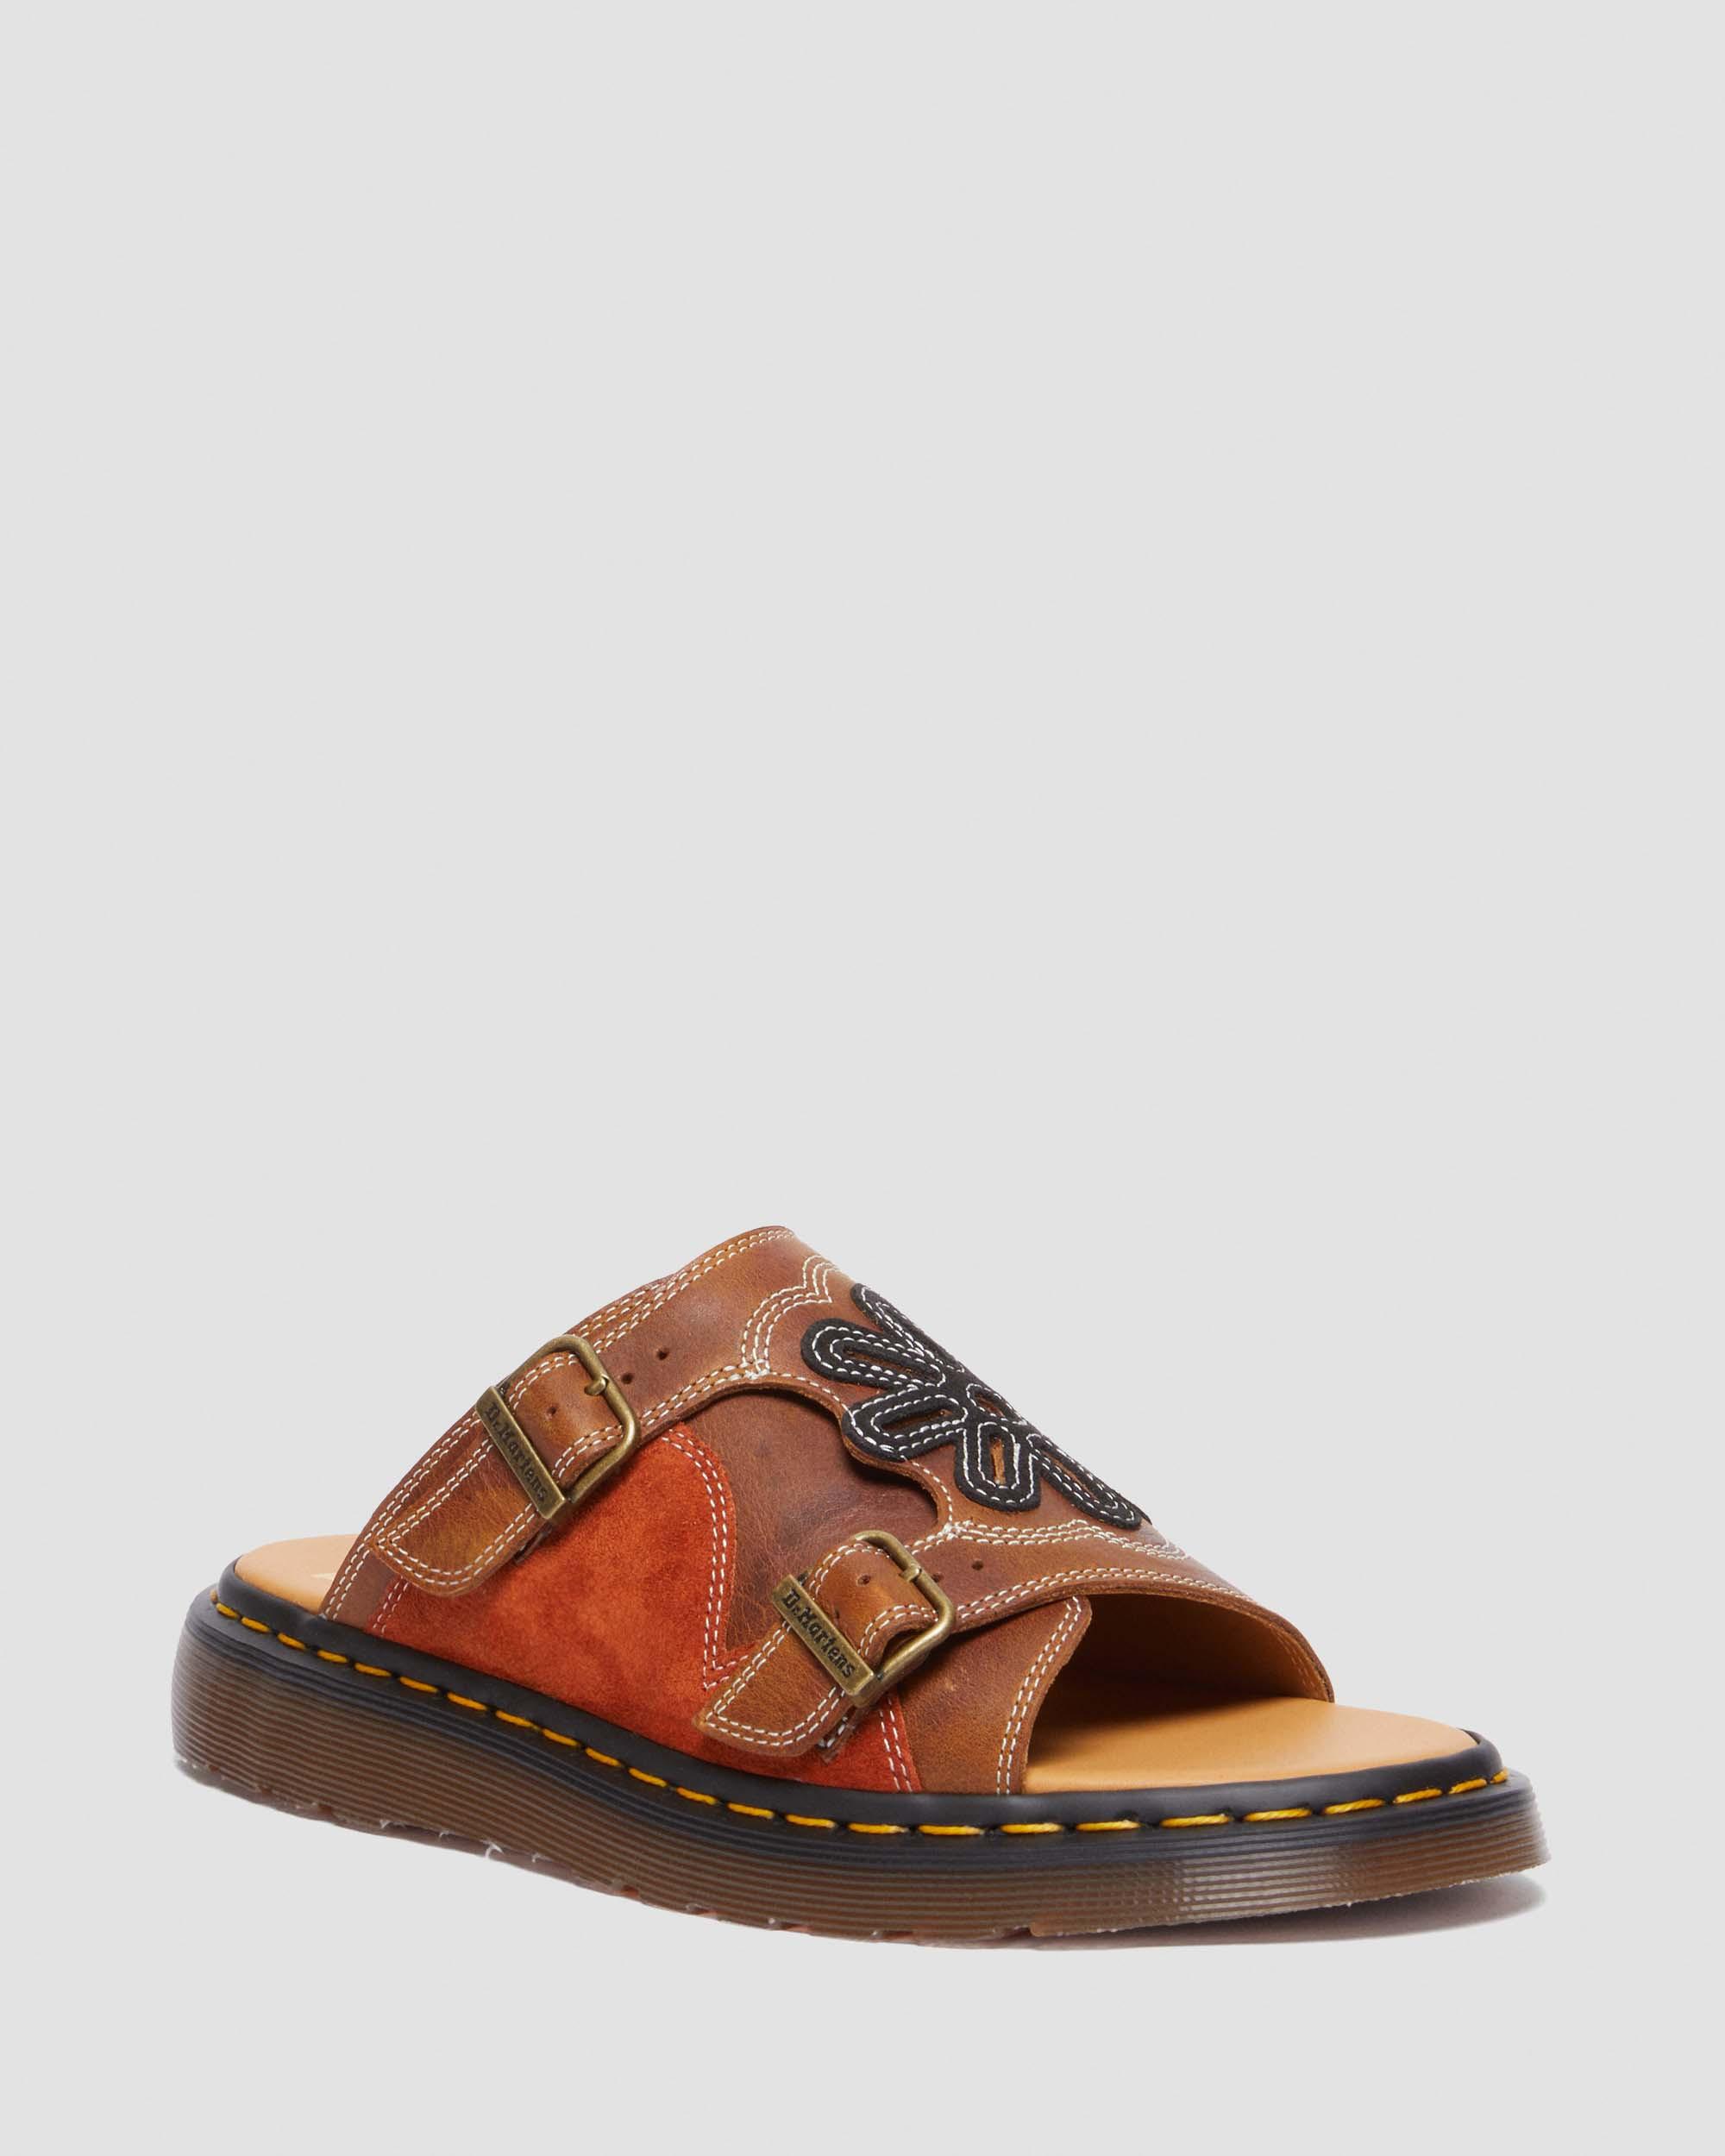 Dayne Made in England Leather & Suede Applique Slide Sandals in Conker Brown+Black+Rust Orange